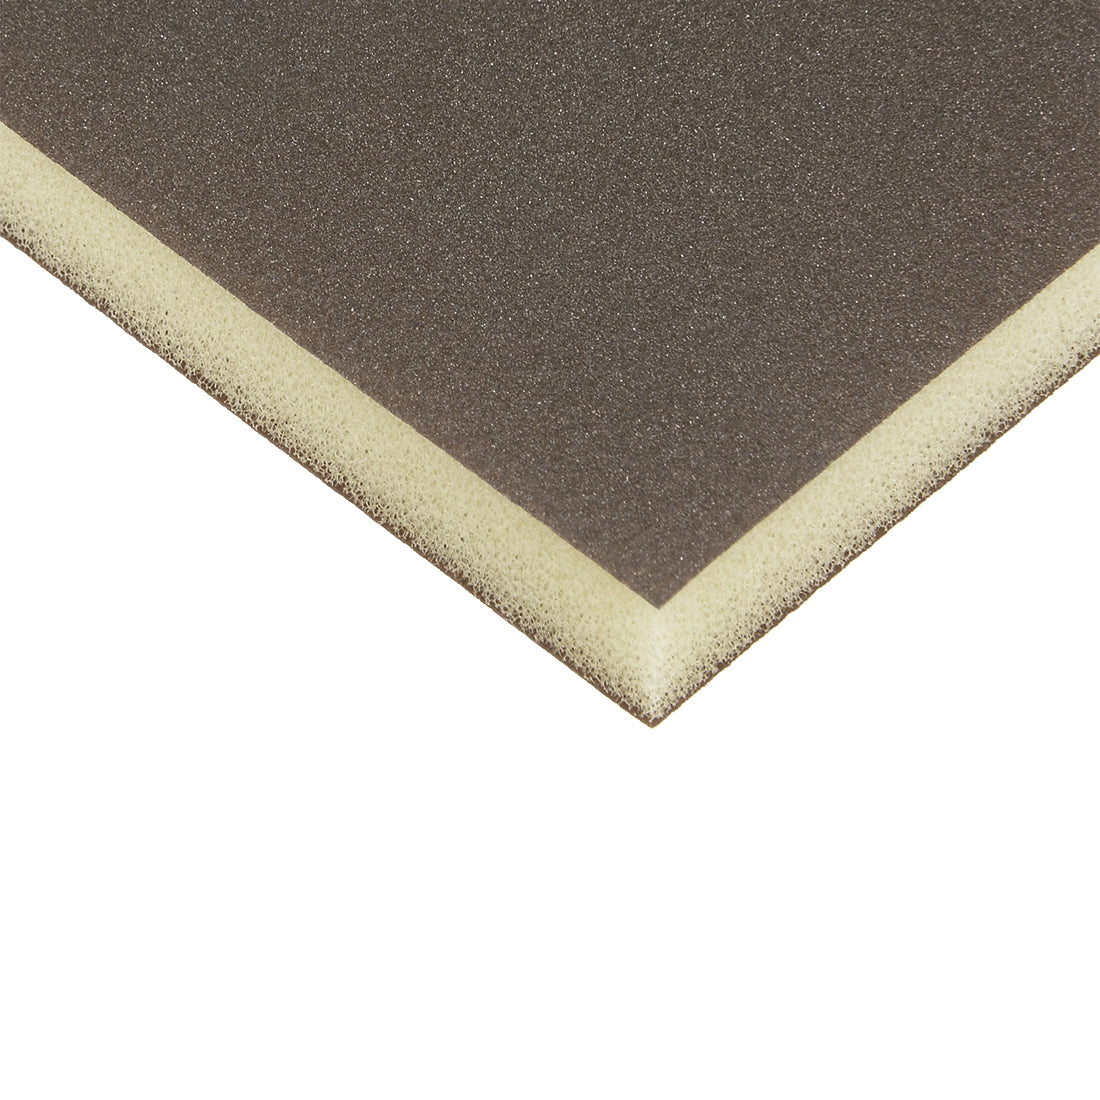 uxcell Uxcell Sanding Sponge, Medium Grit 220 Grit Sanding Block Pad, 4.72inch x 3.86inch x 0.47inch Size 8 Pcs